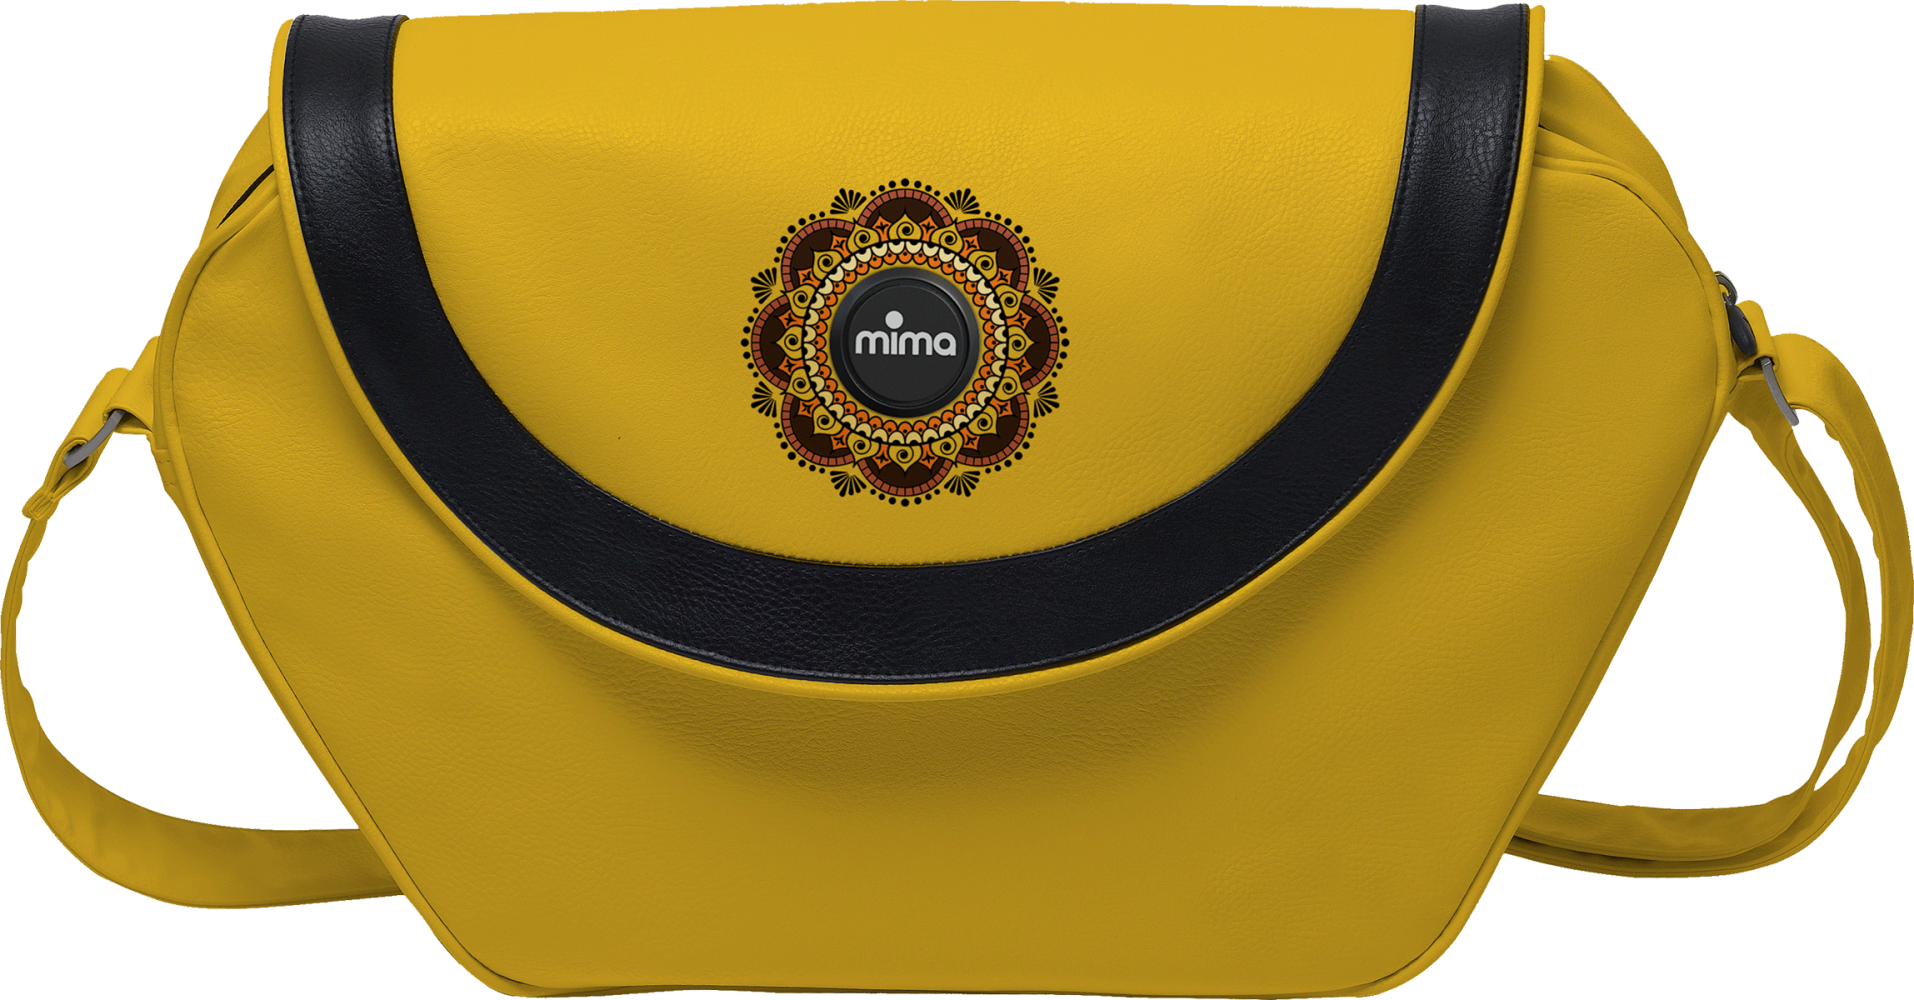 mima xari yellow limited edition